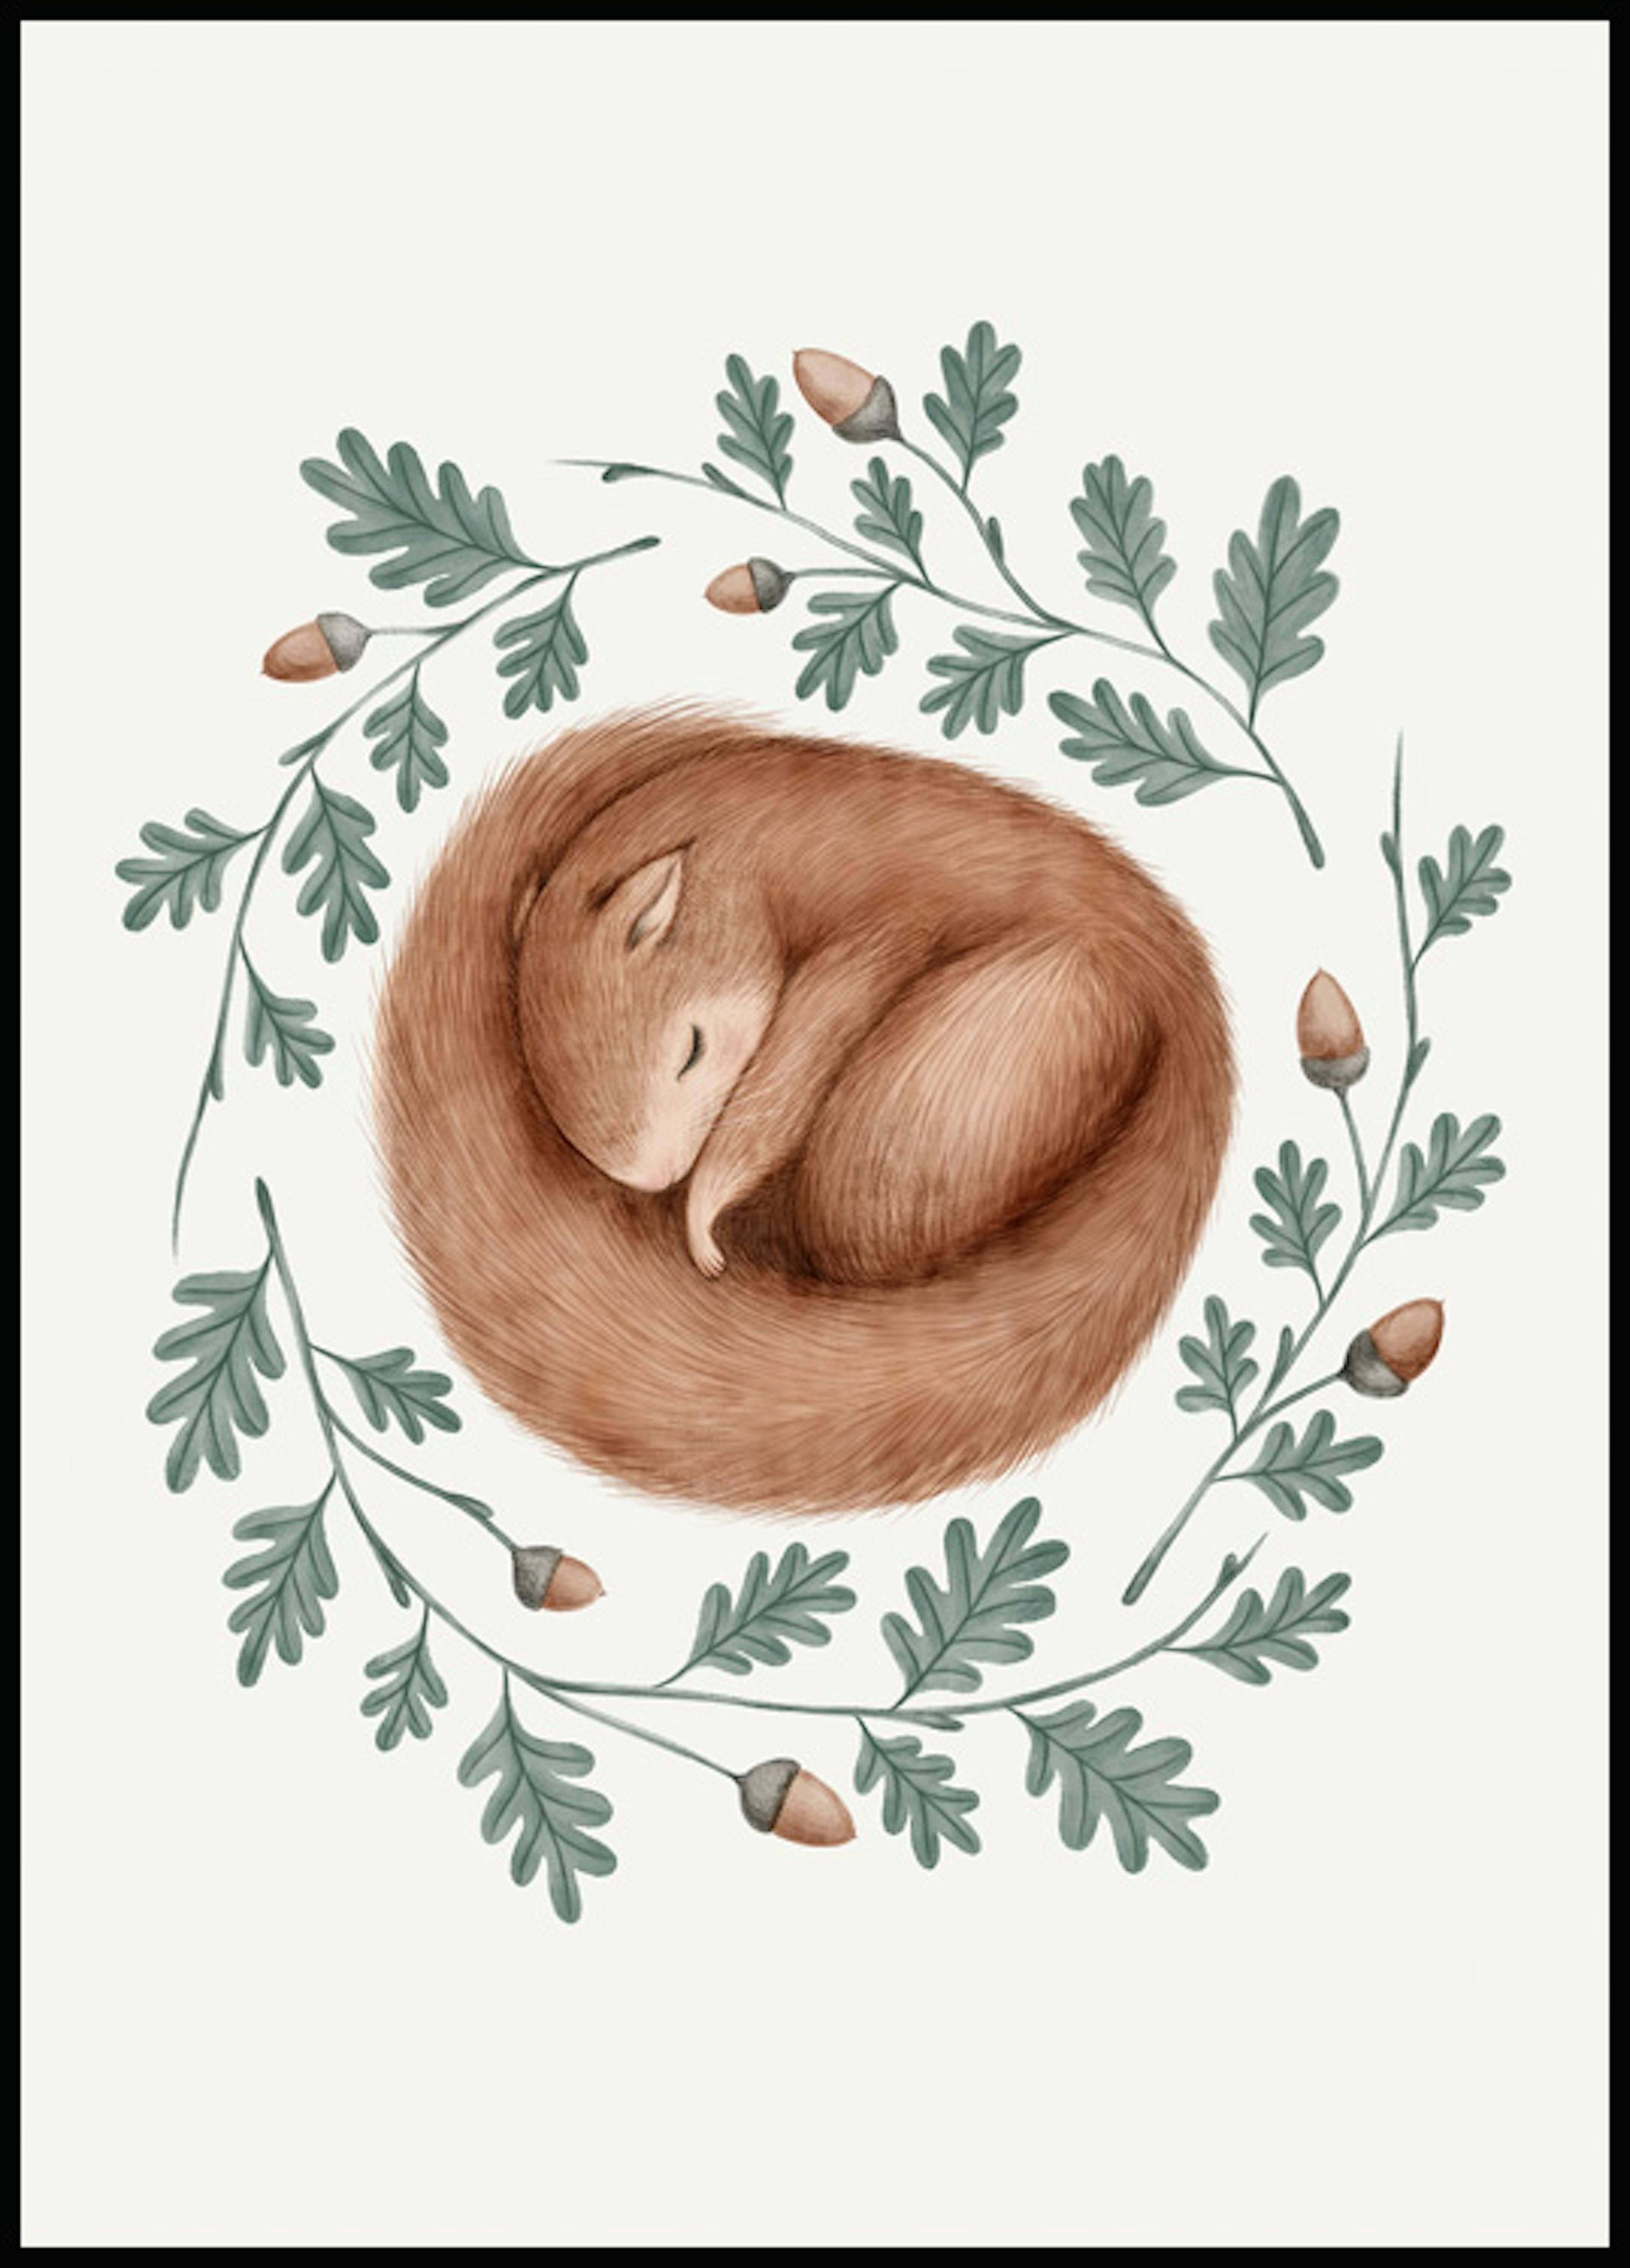 Sleeping Squirrel Poster 0